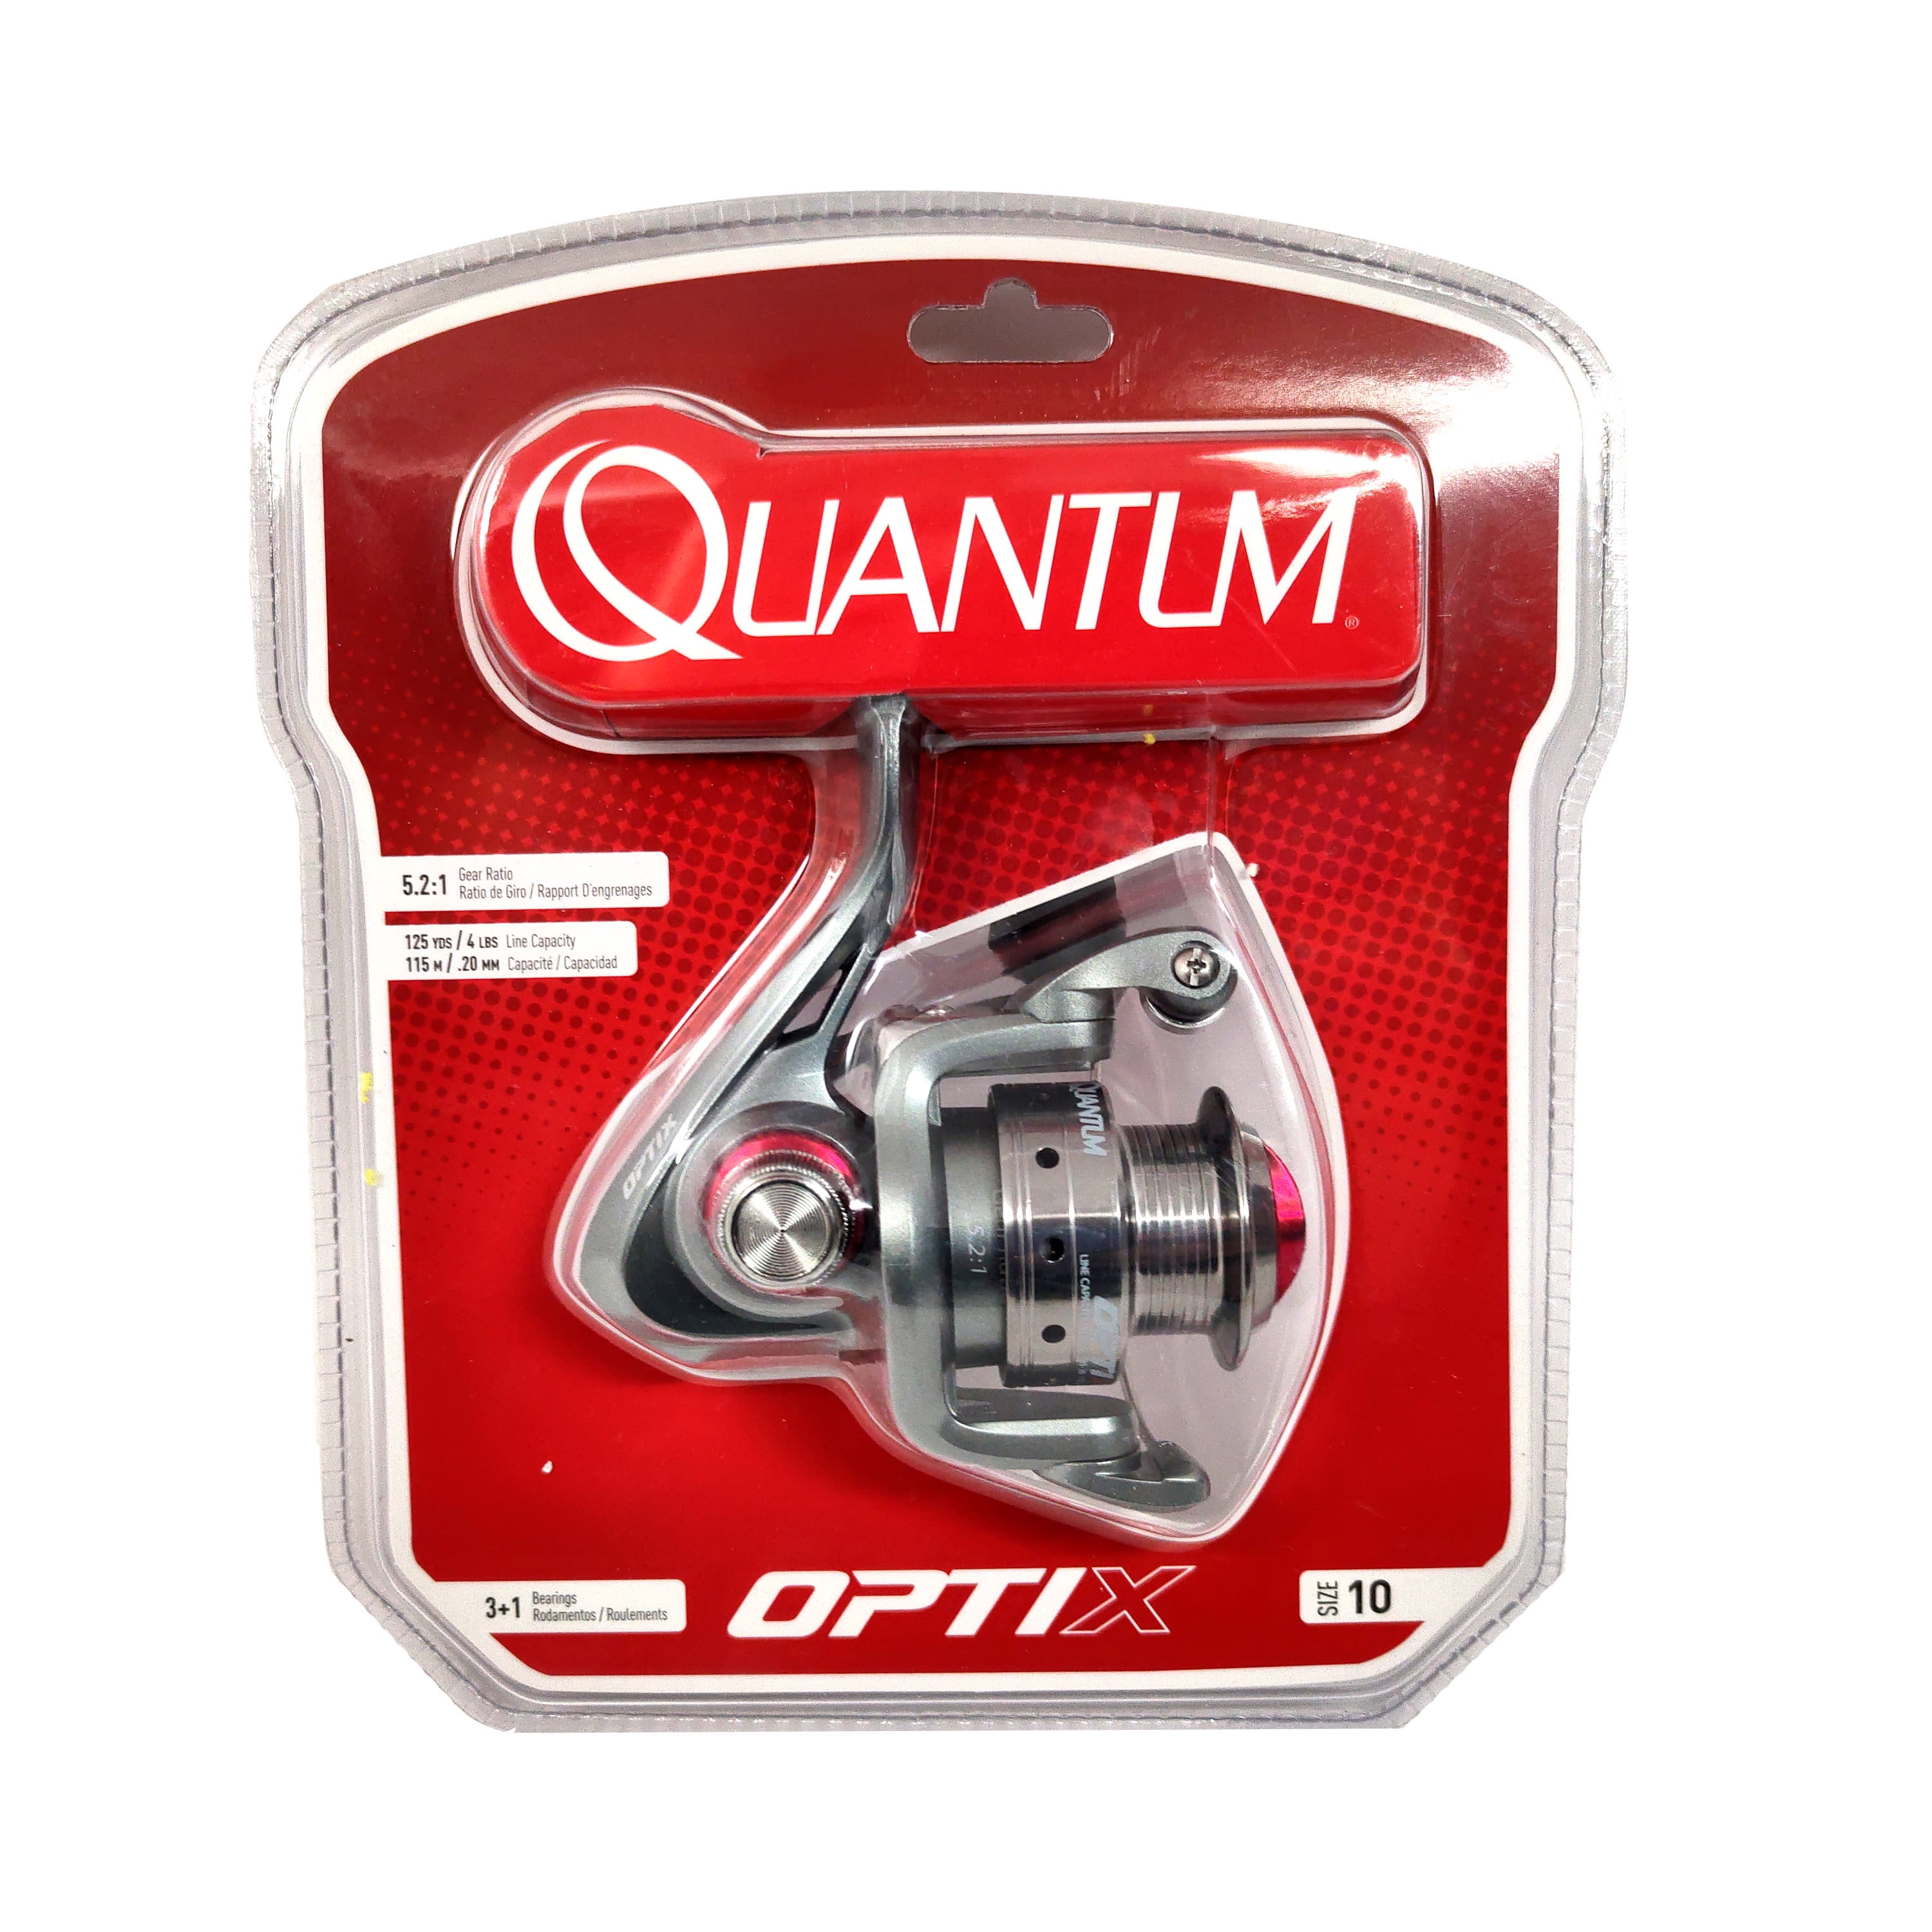 Quantum Centex CTX20 5.1 1 Gear Ratio 10 Bearing Spinning Reel BULK for  sale online